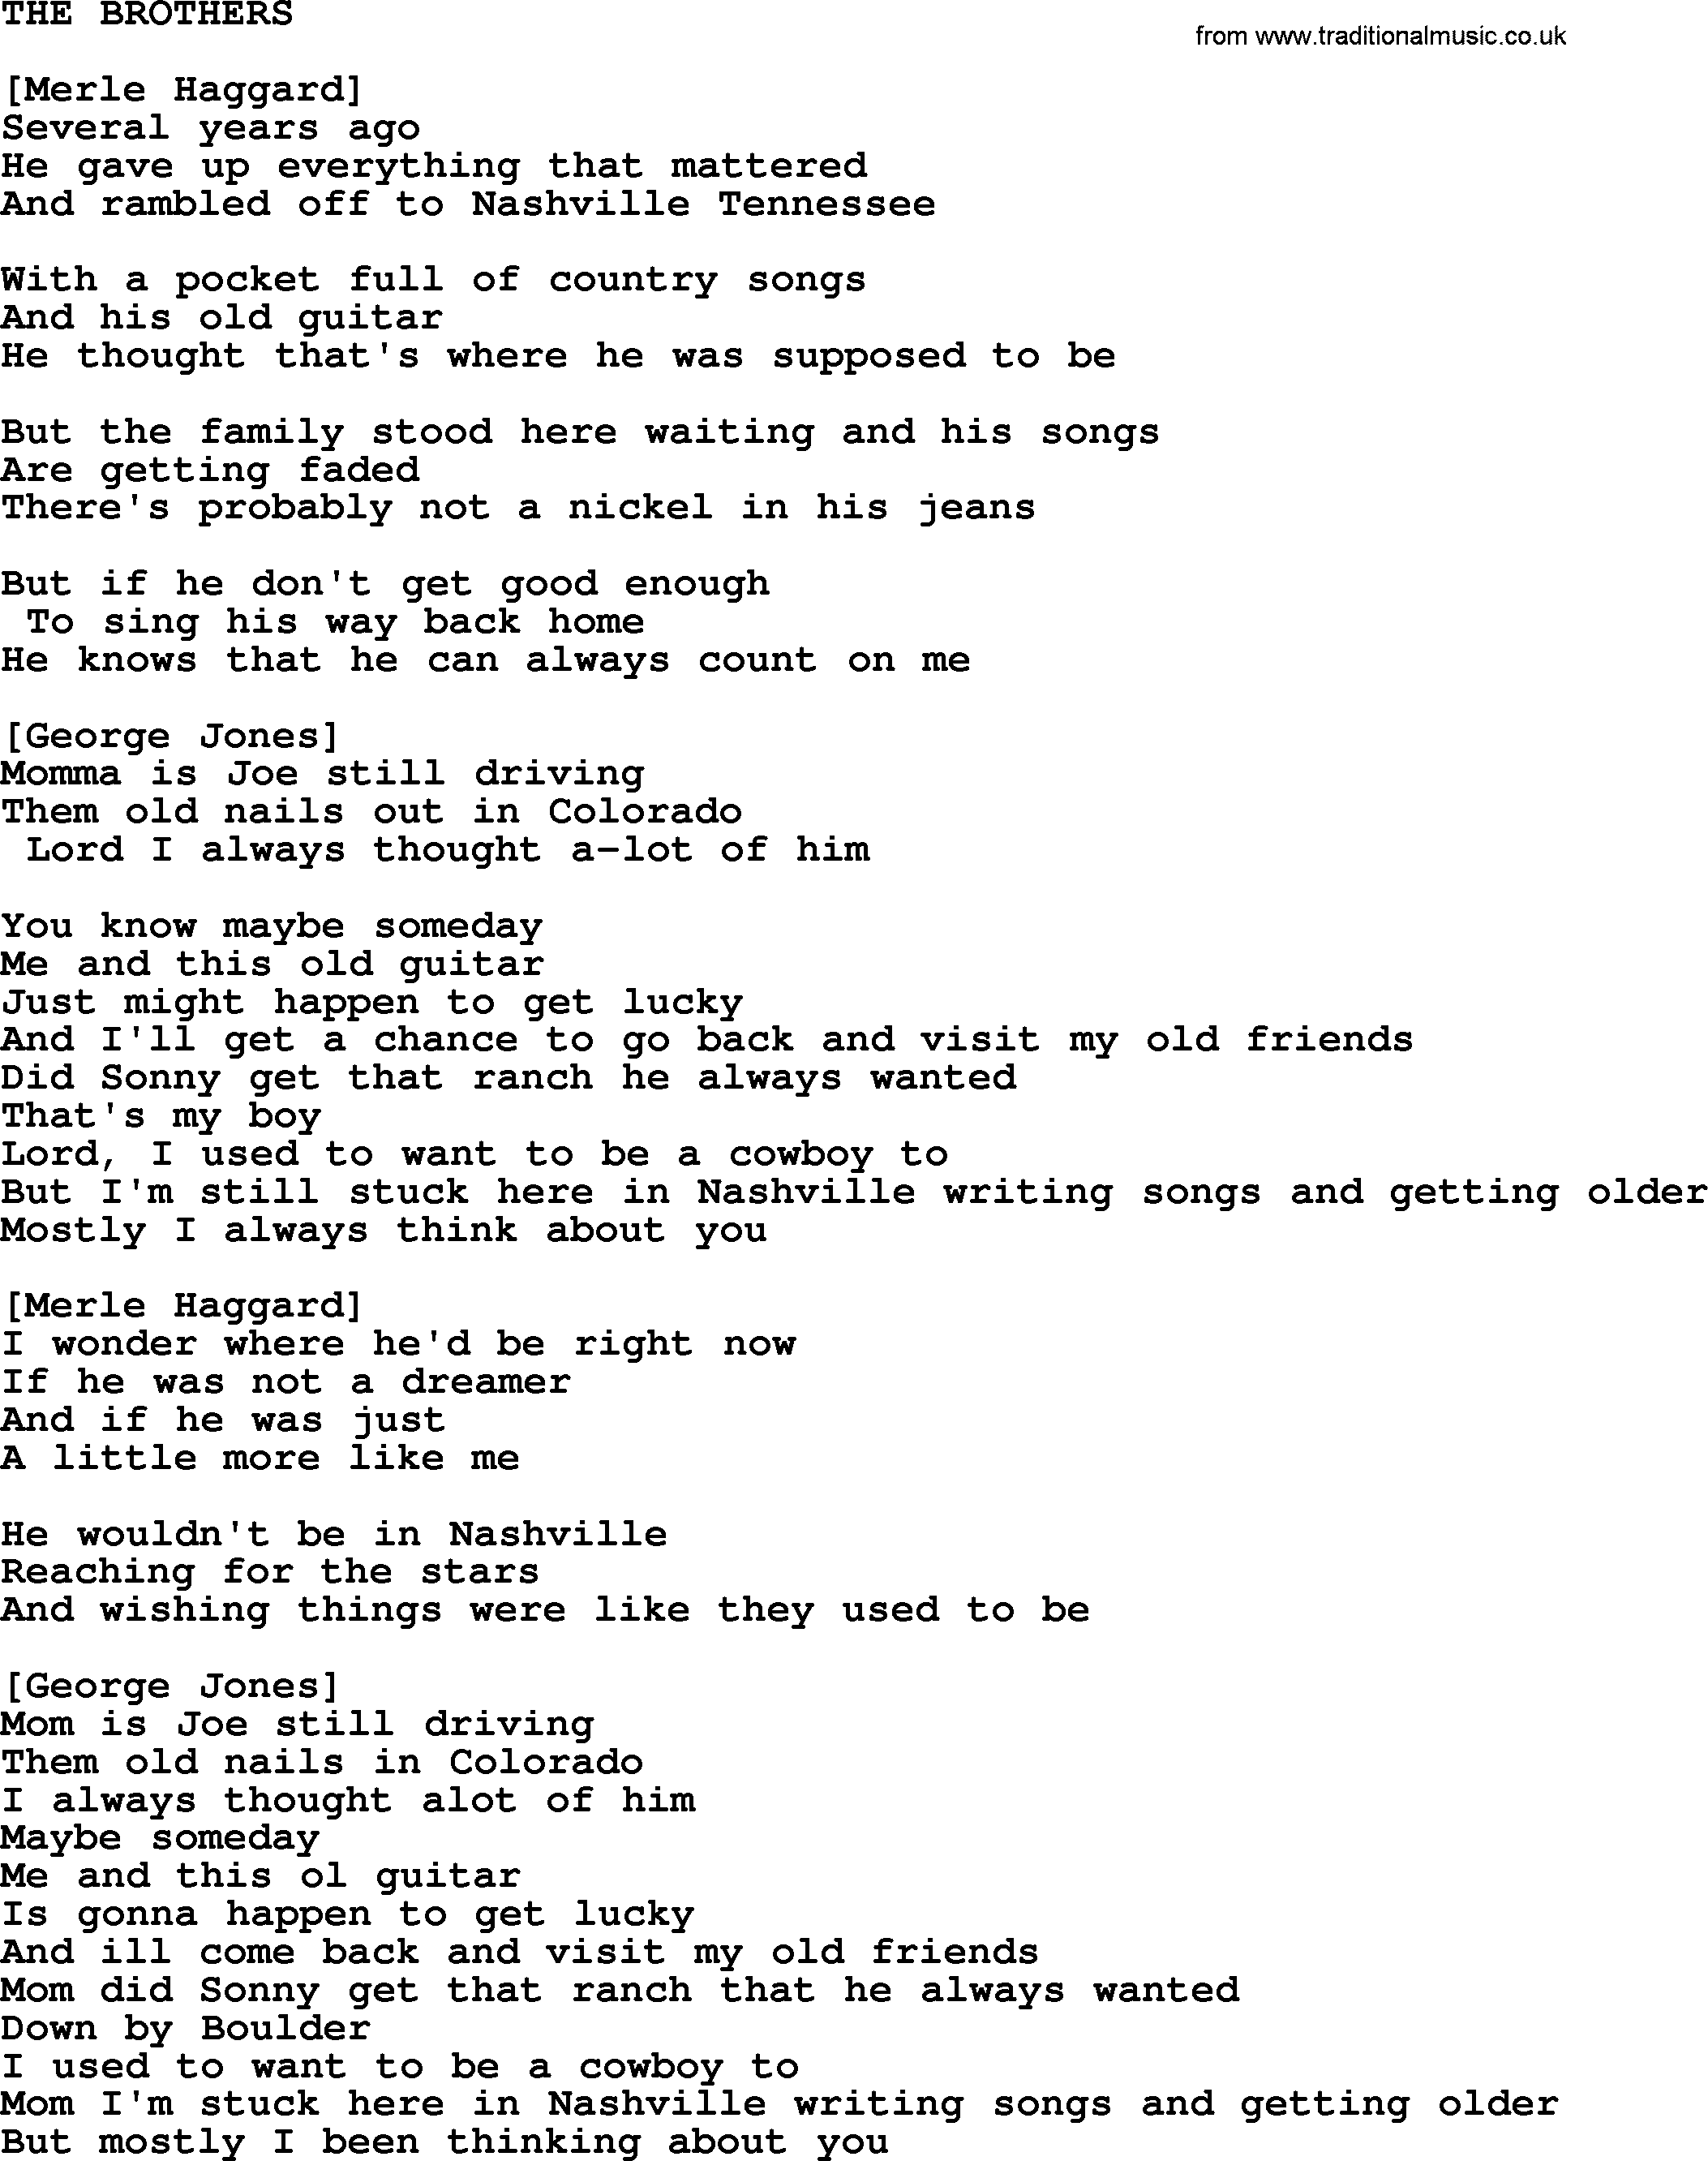 Merle Haggard song: The Brothers, lyrics.